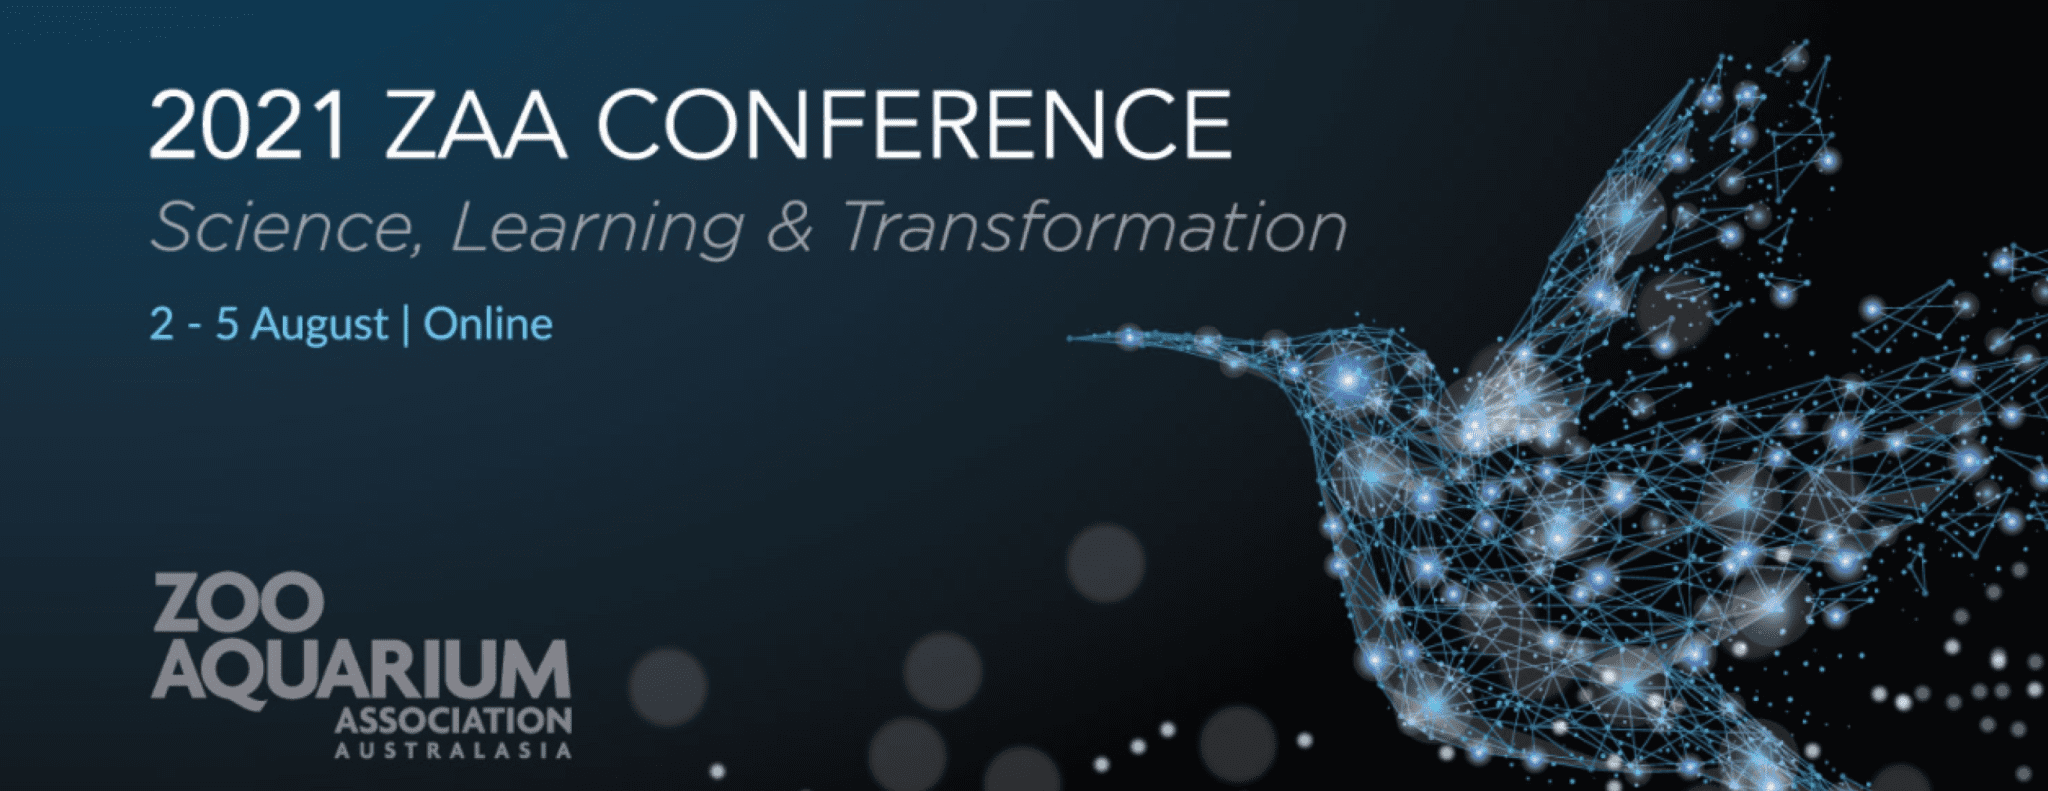 Waza Conference 2021